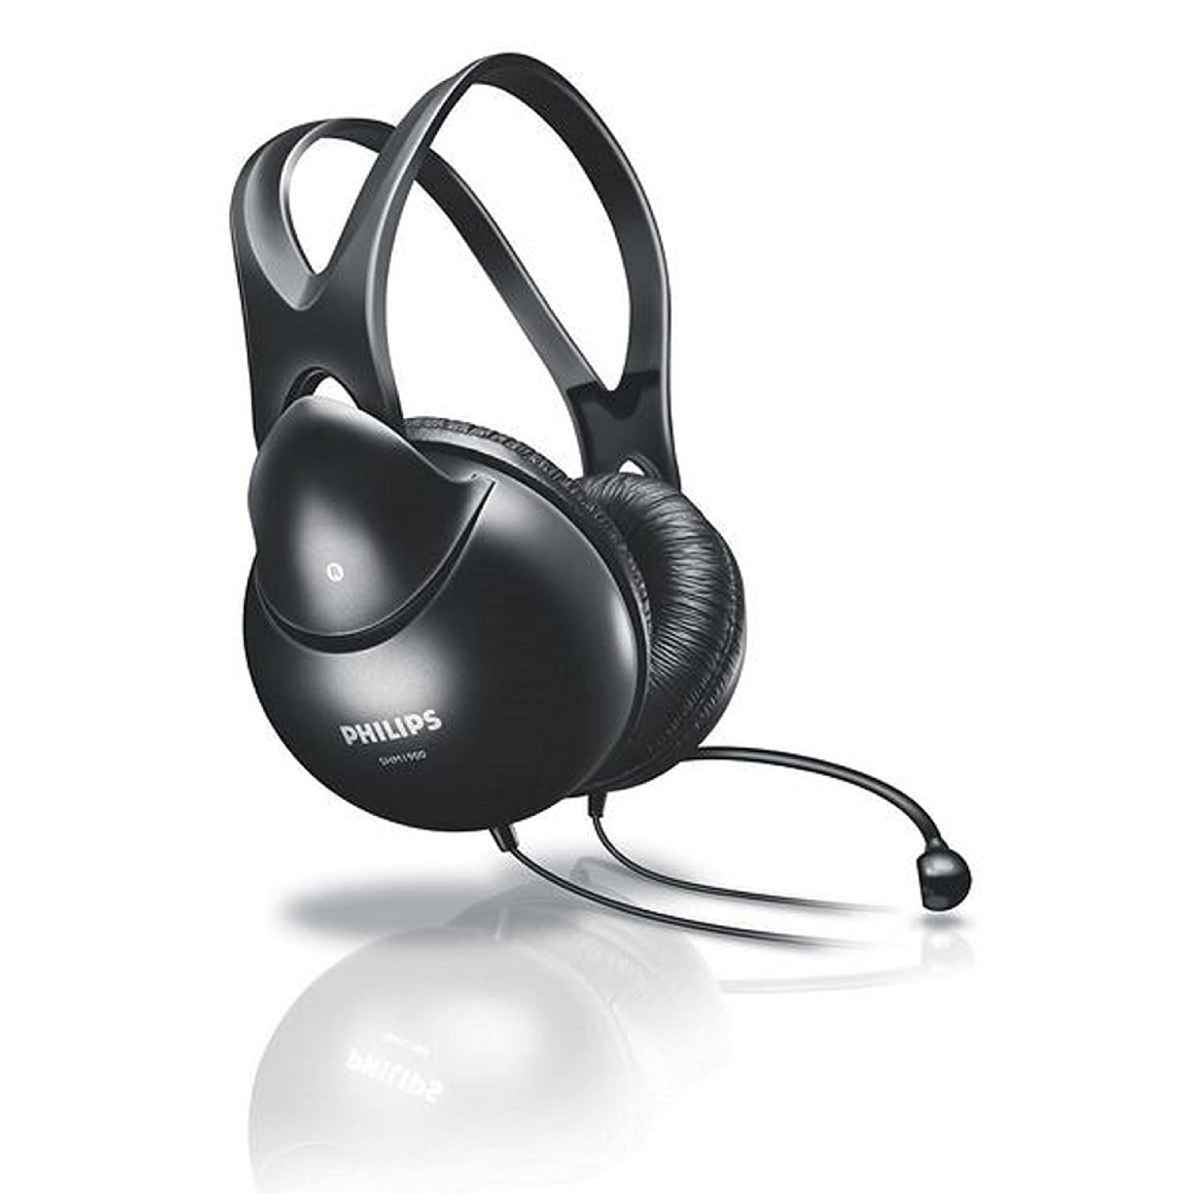 Philips SHM1900 Over-Ear Headphones